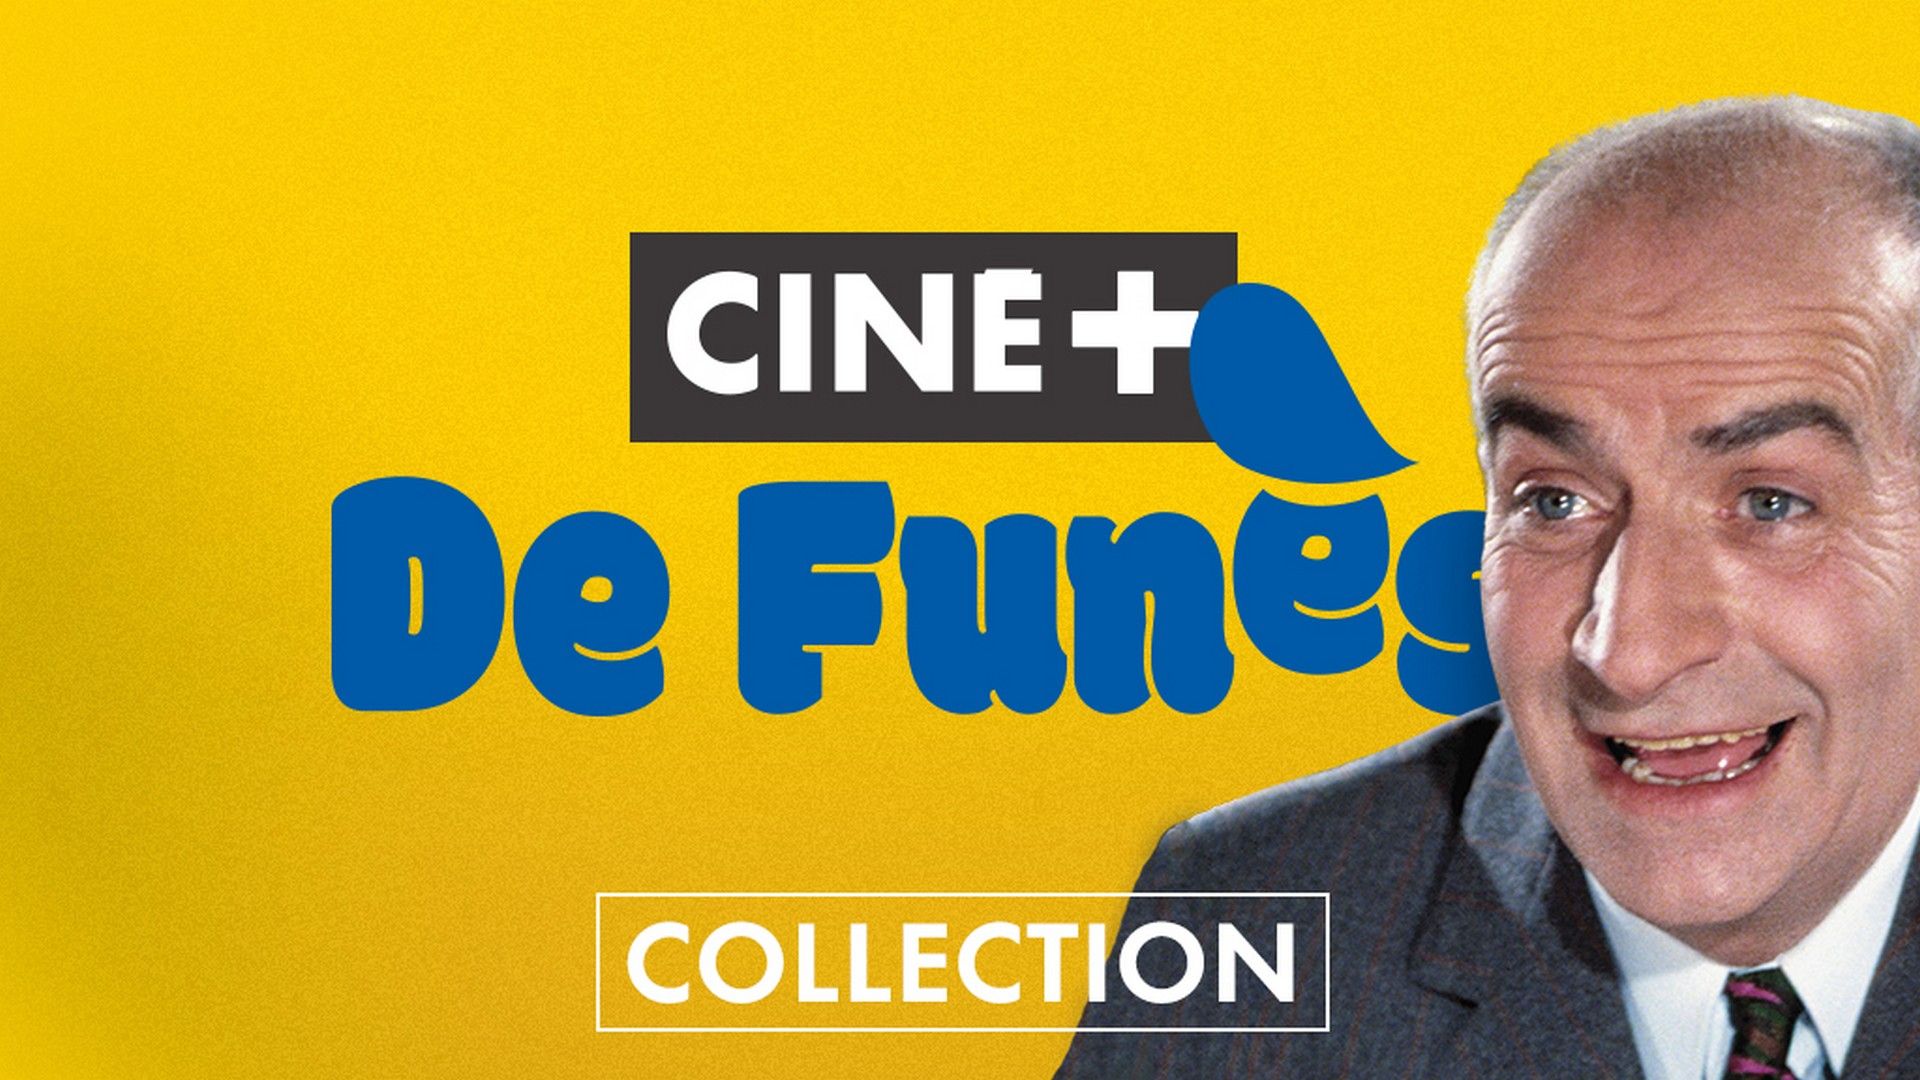 Arrivée aujourd'hui de CINE+ De Funès, la nouvelle chaîne digitale CINE+